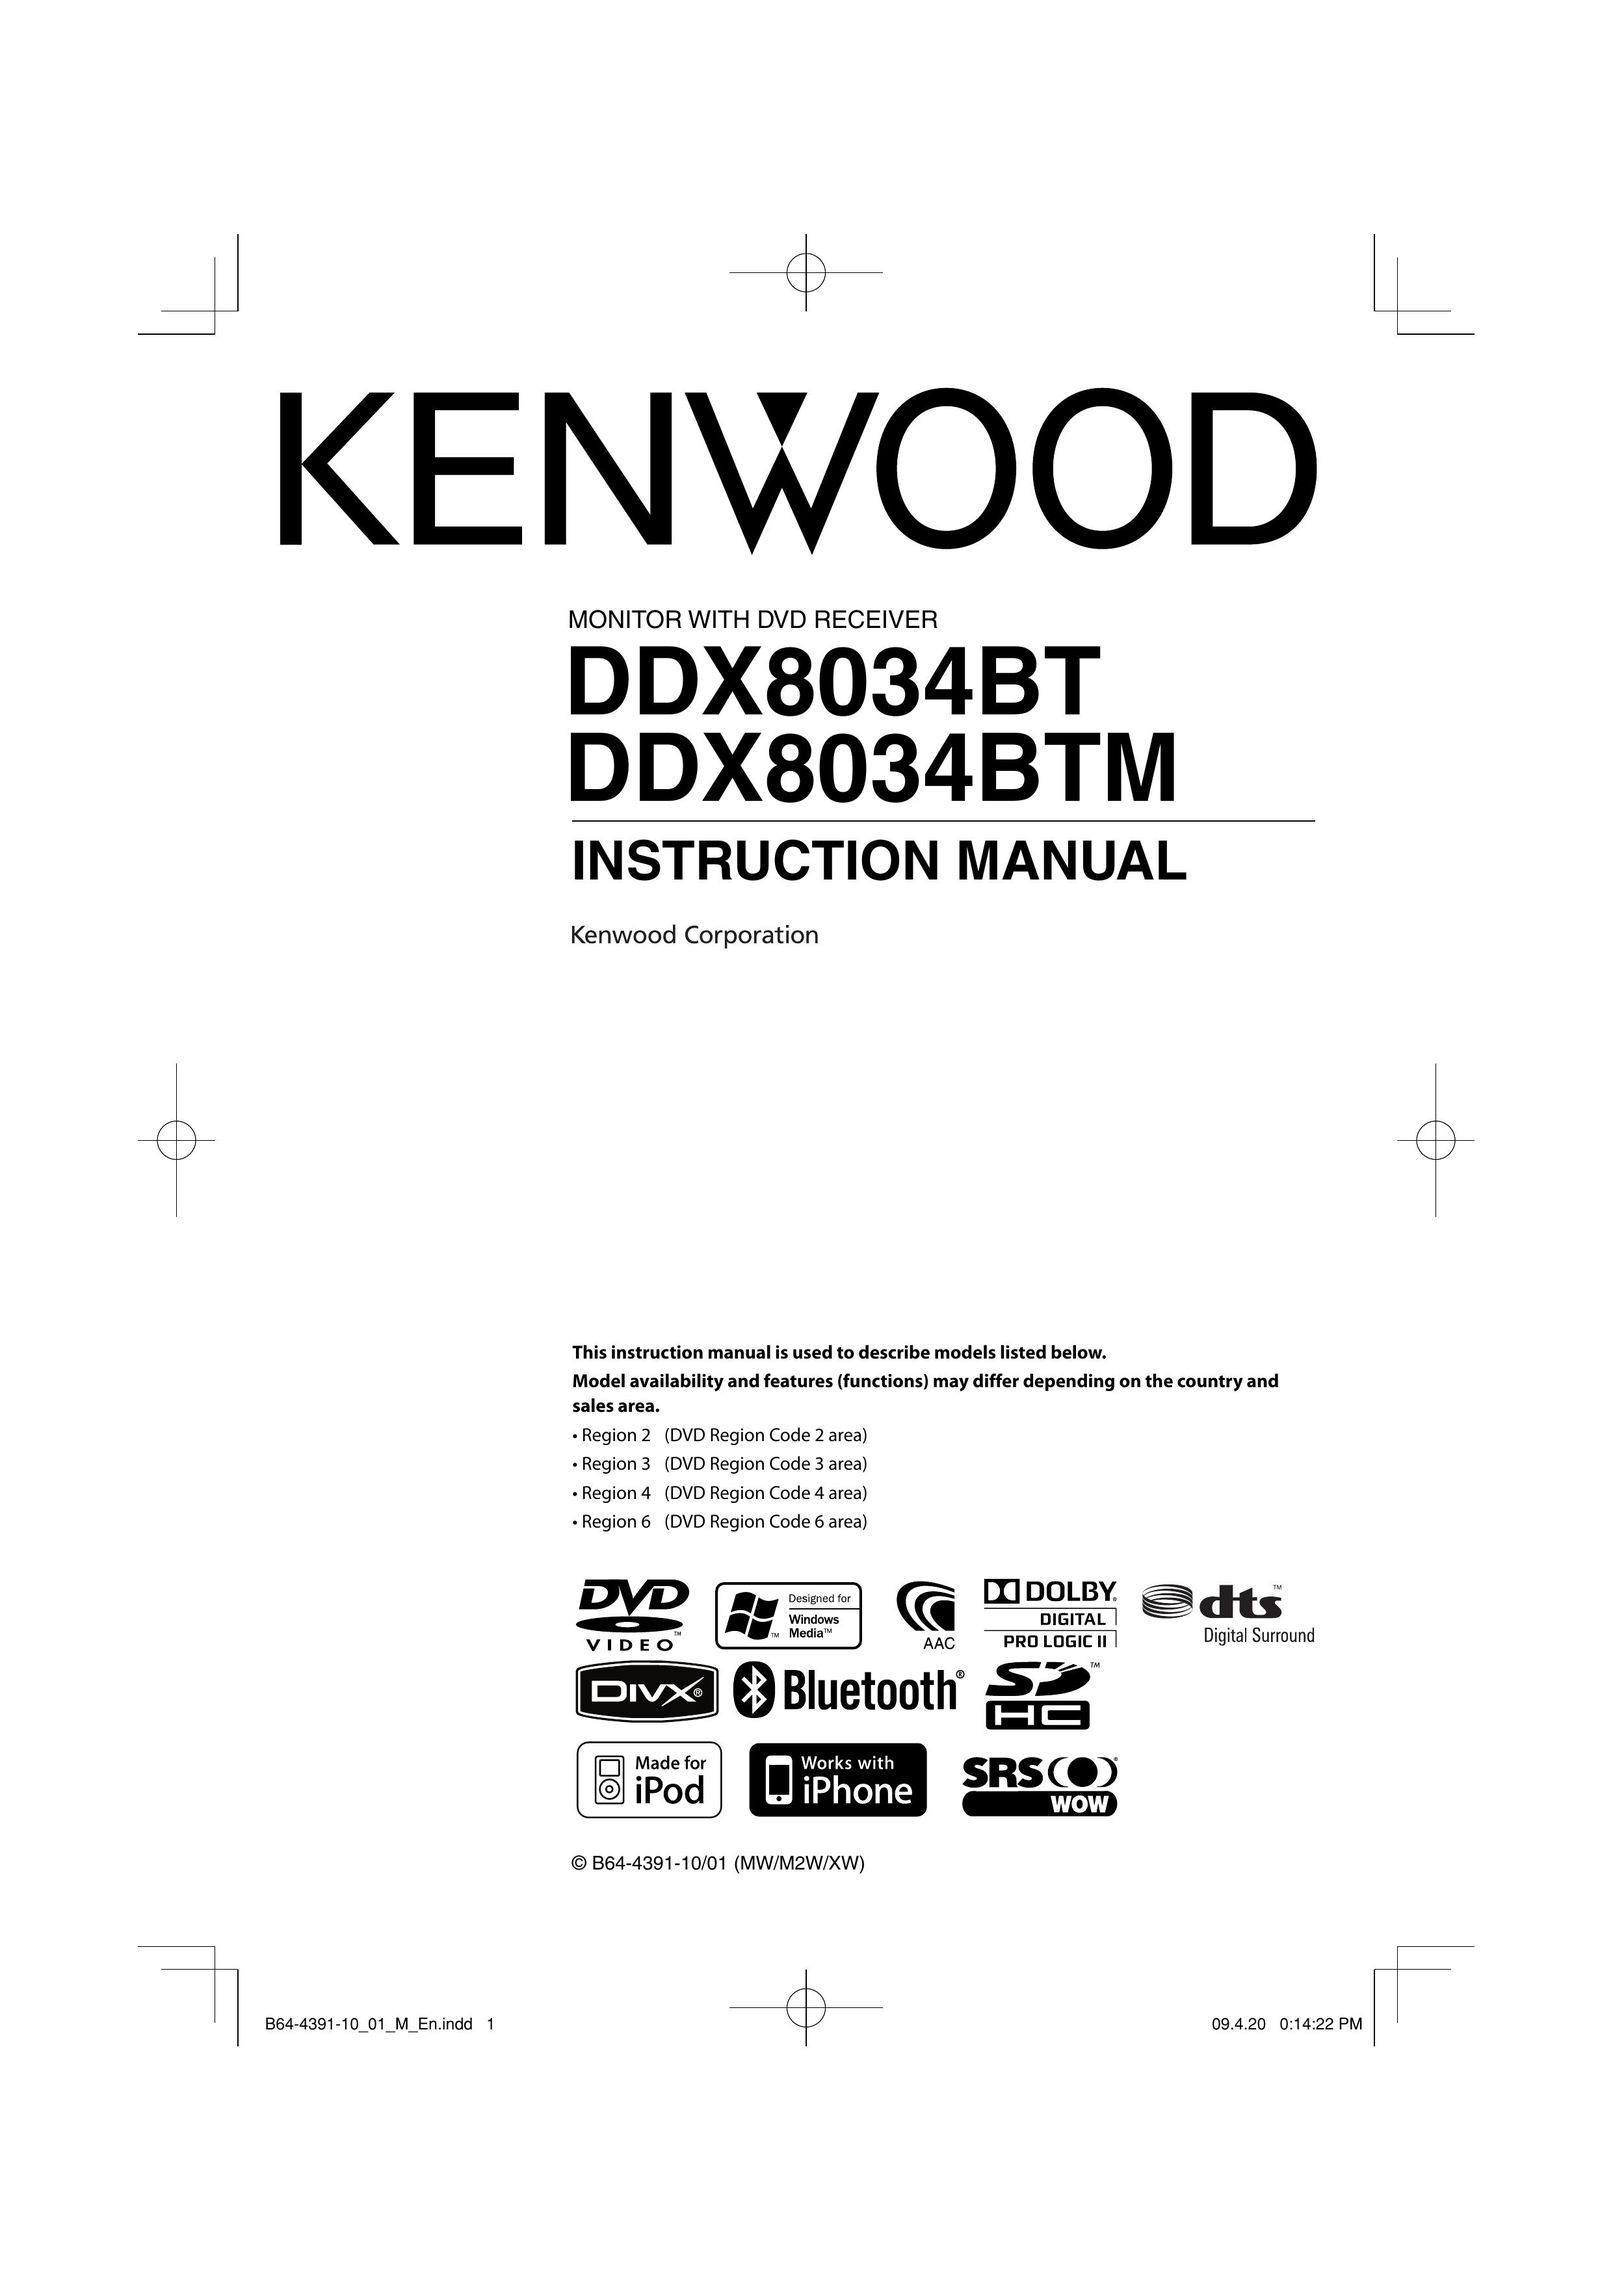 Kenwood DDX8034BTM Car Satellite TV System User Manual